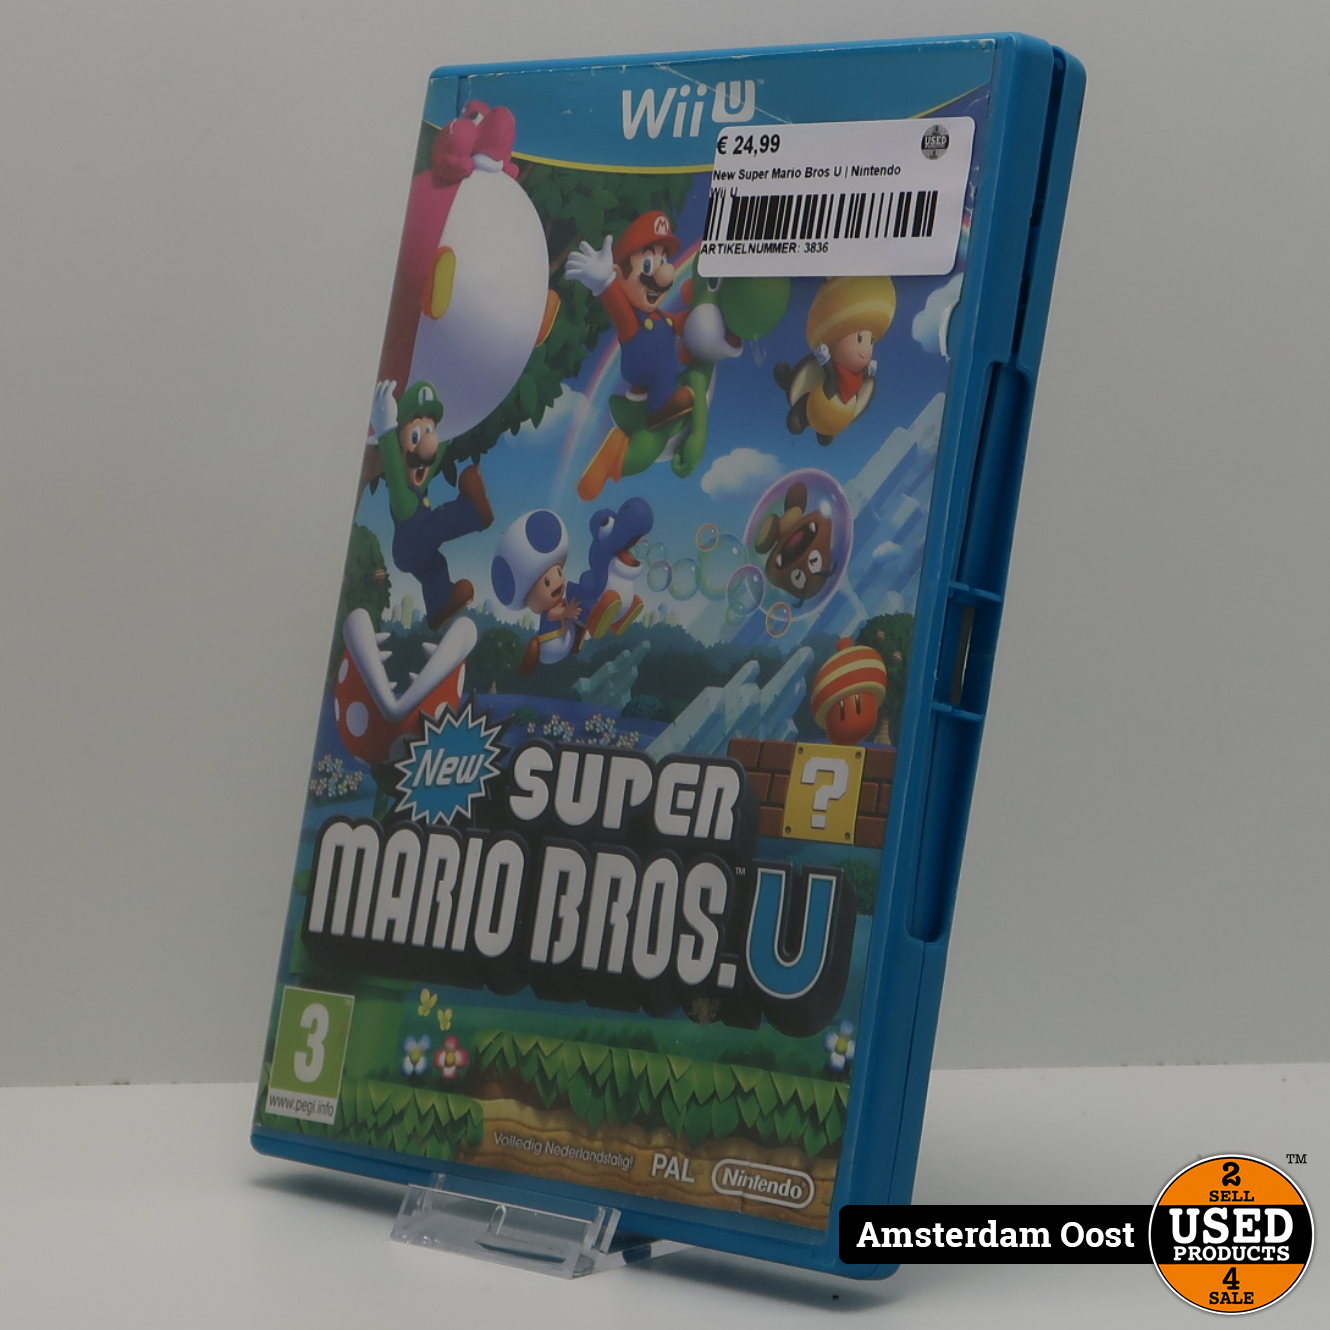 New Mario Bros U | Nintendo Wii U - Used Amsterdam Oost